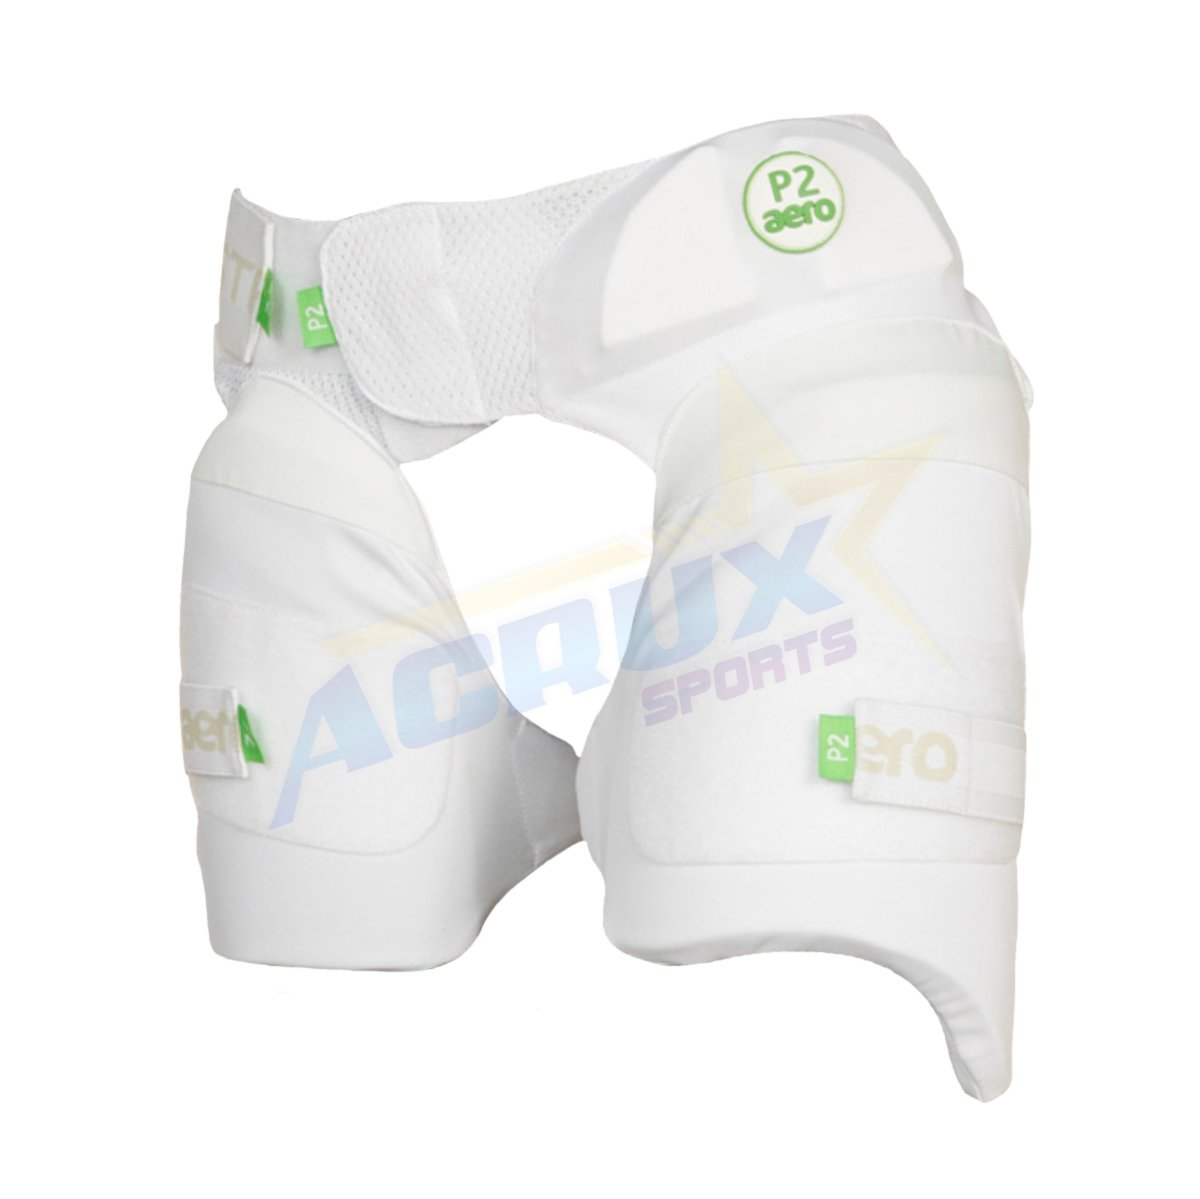 Aero P2 Stripper Protection v7.0 Cricket Thigh Guard.